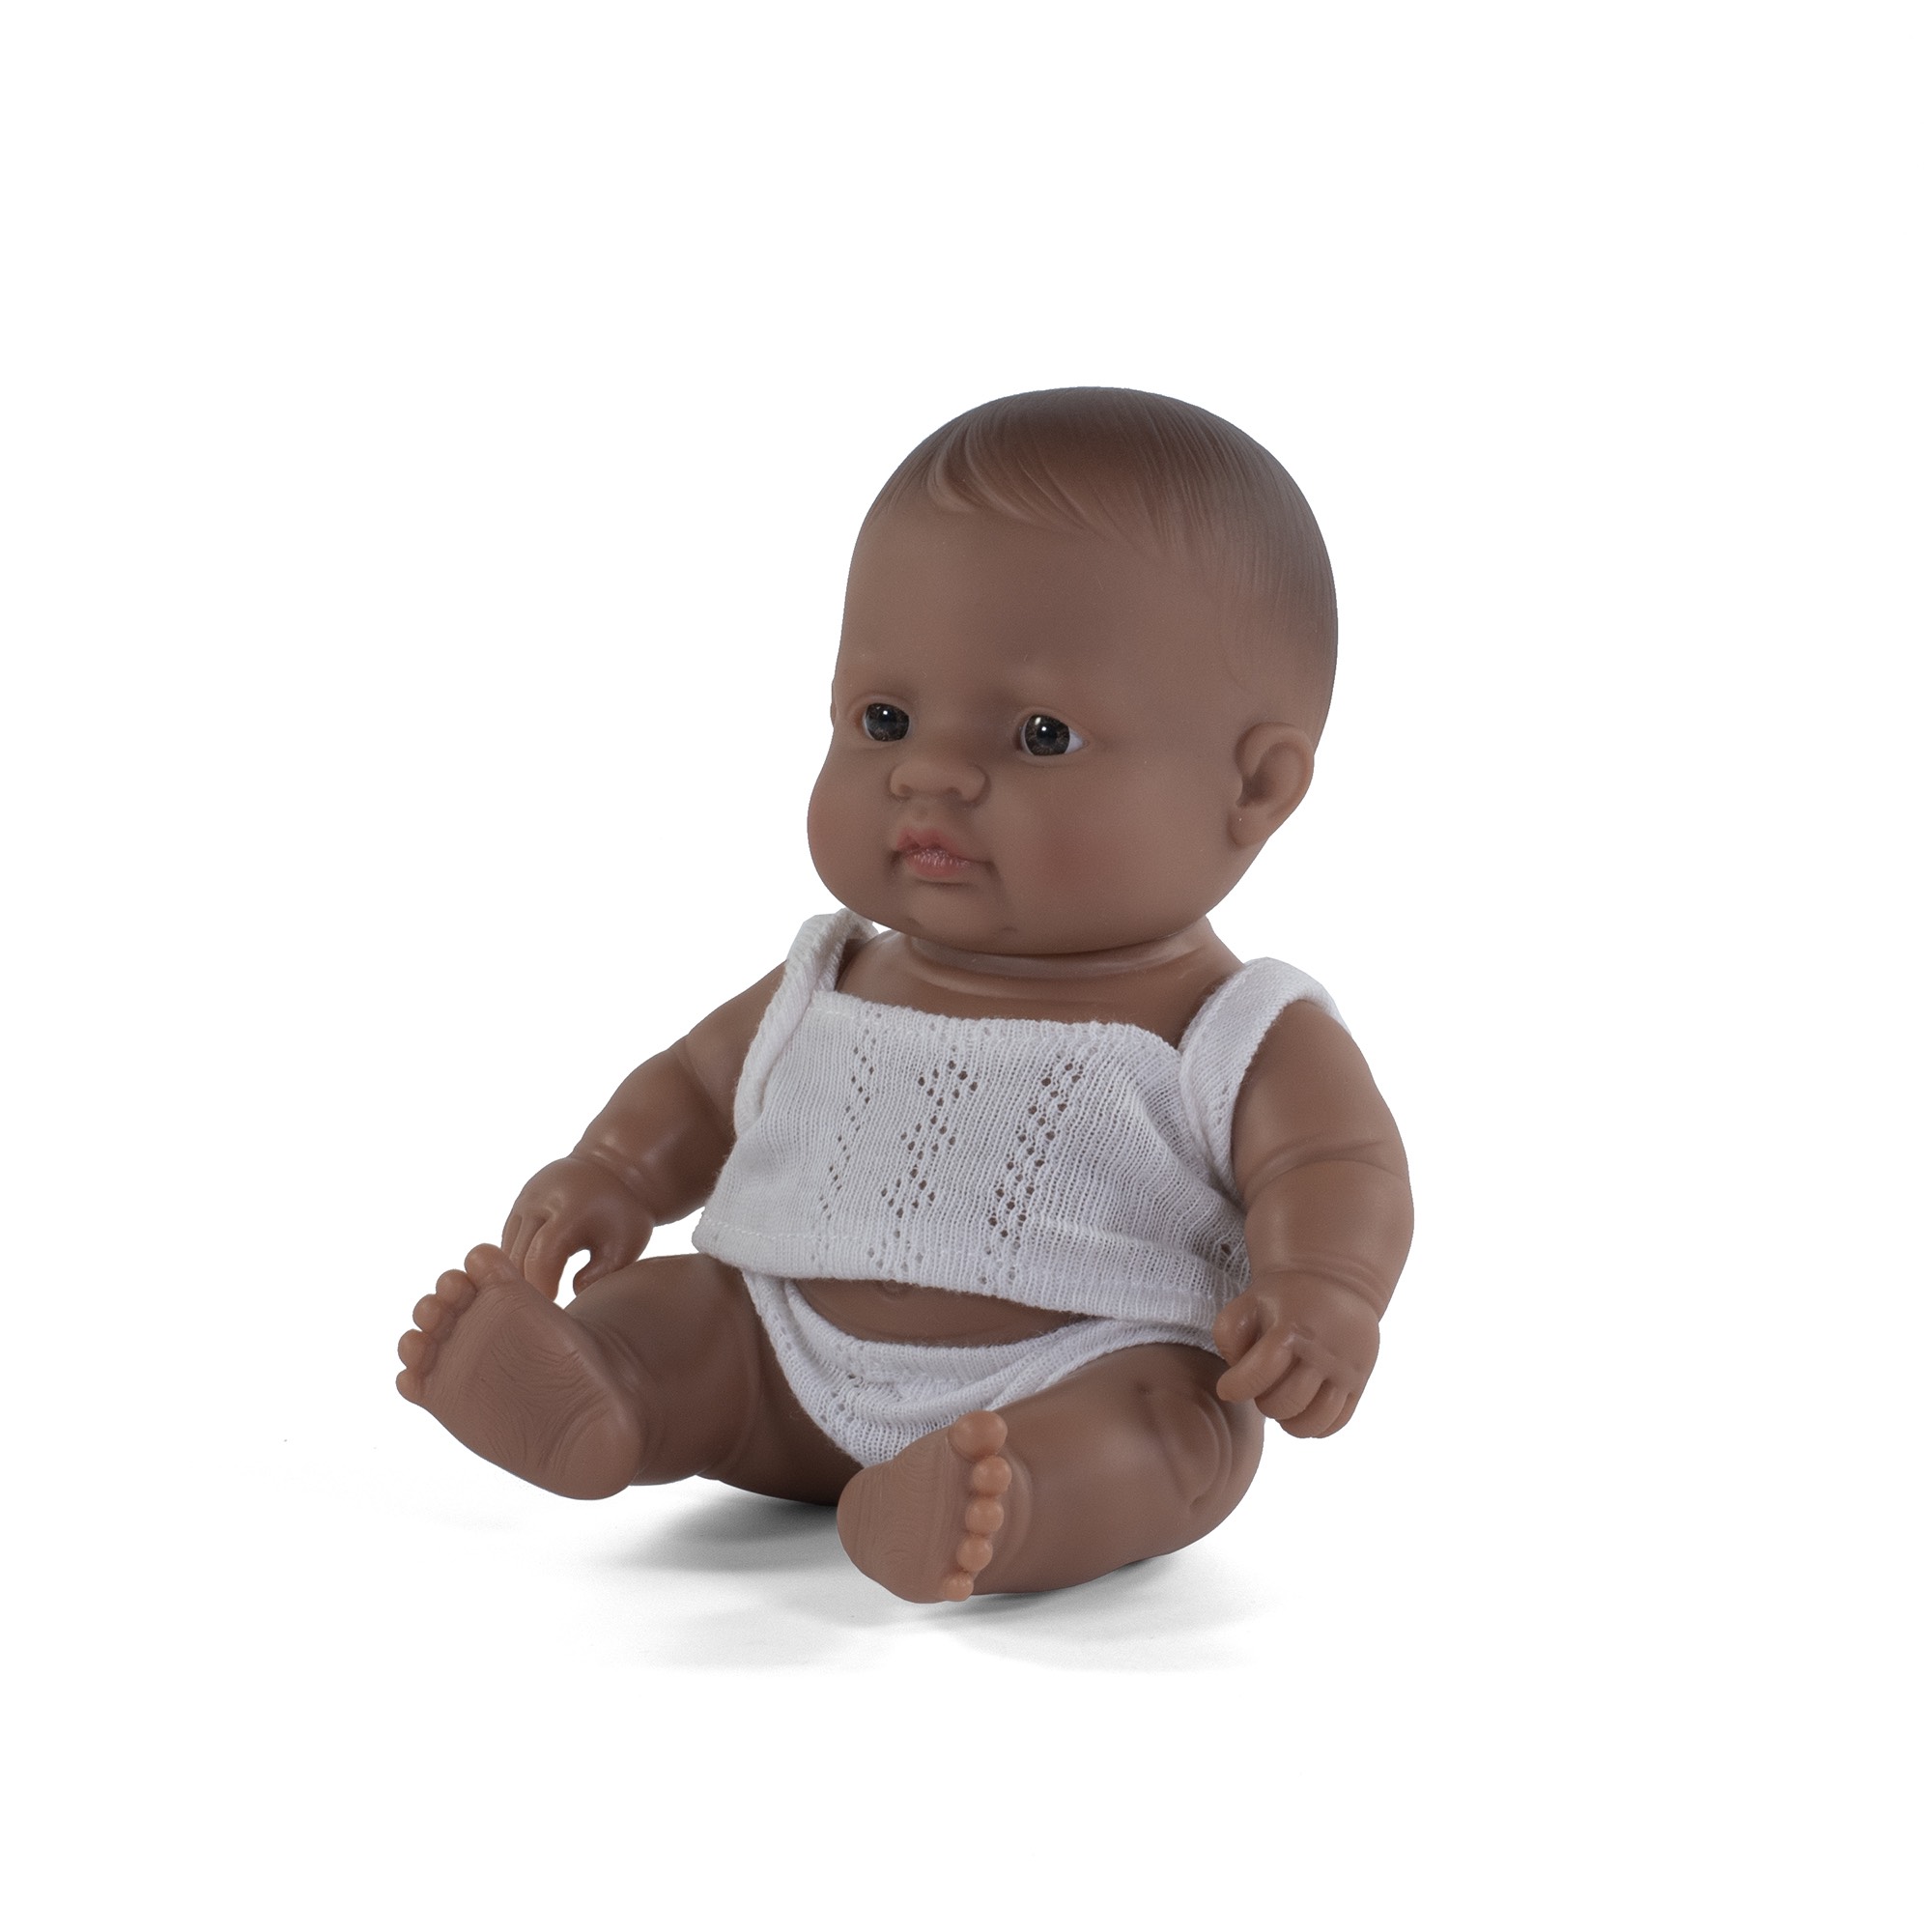 Miniland Baby Docka Billy ( Doll Hispanic Boy 21 cm )